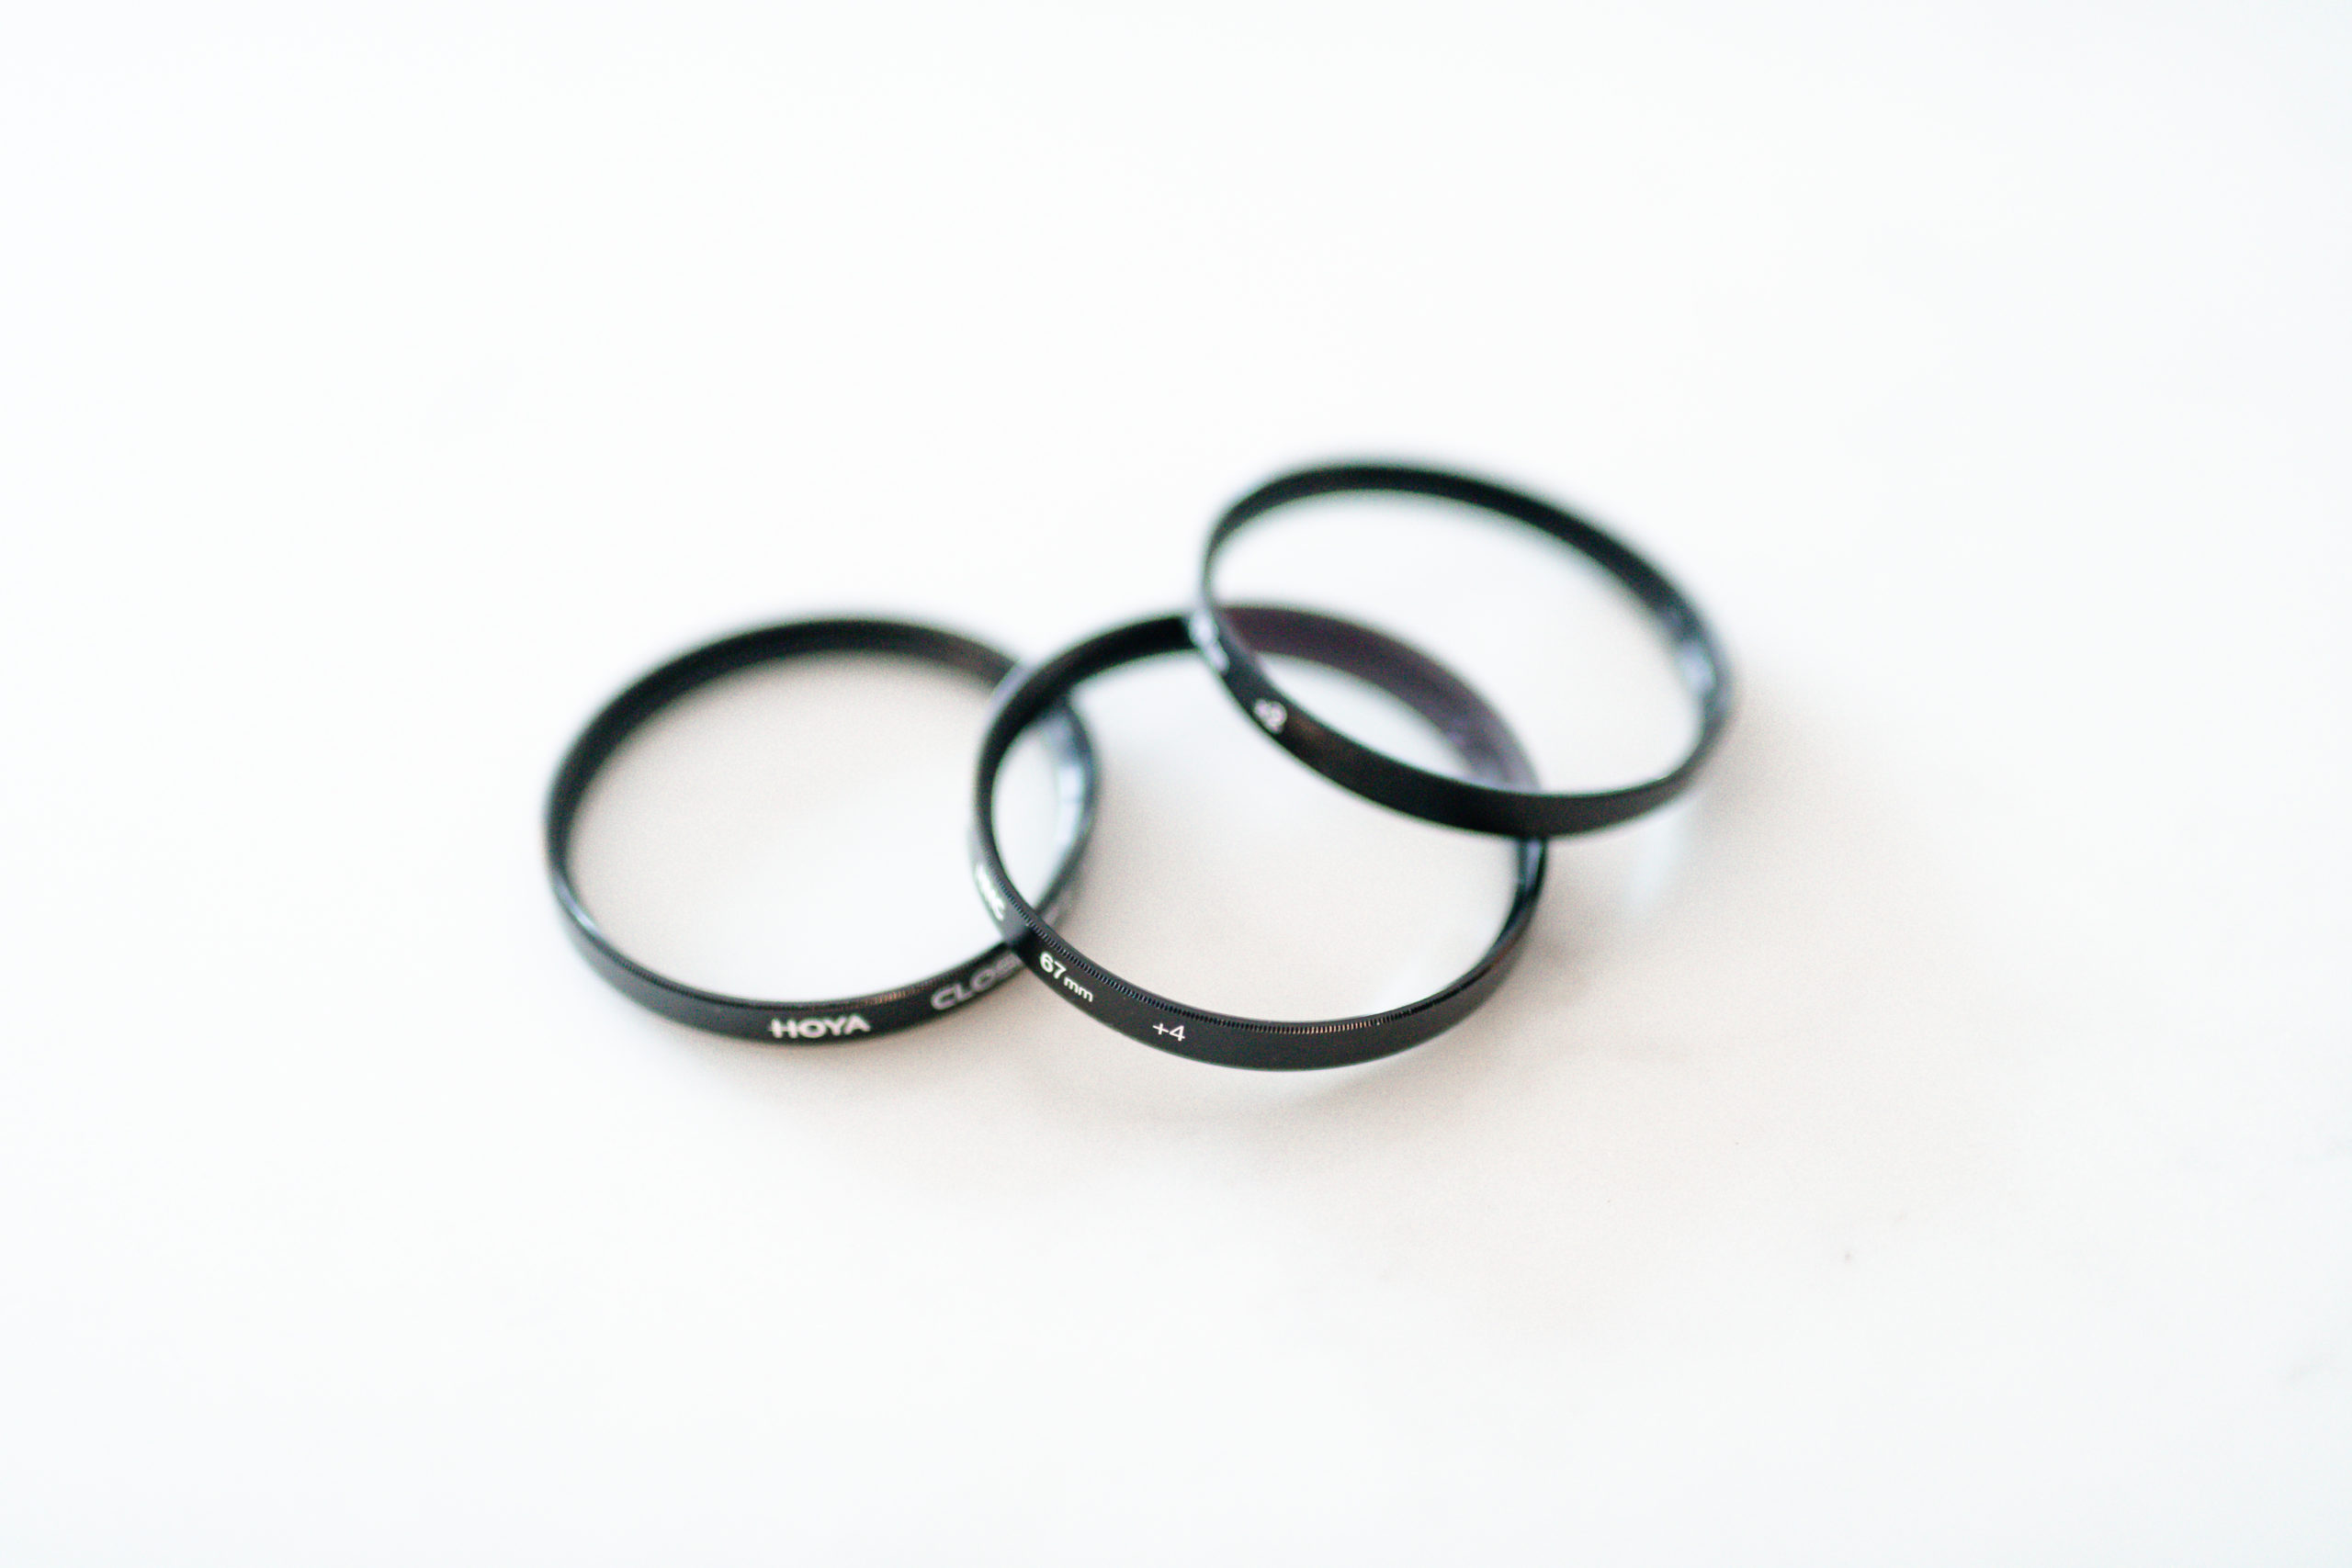 Hoya Closeup Filters for Wedding Photography